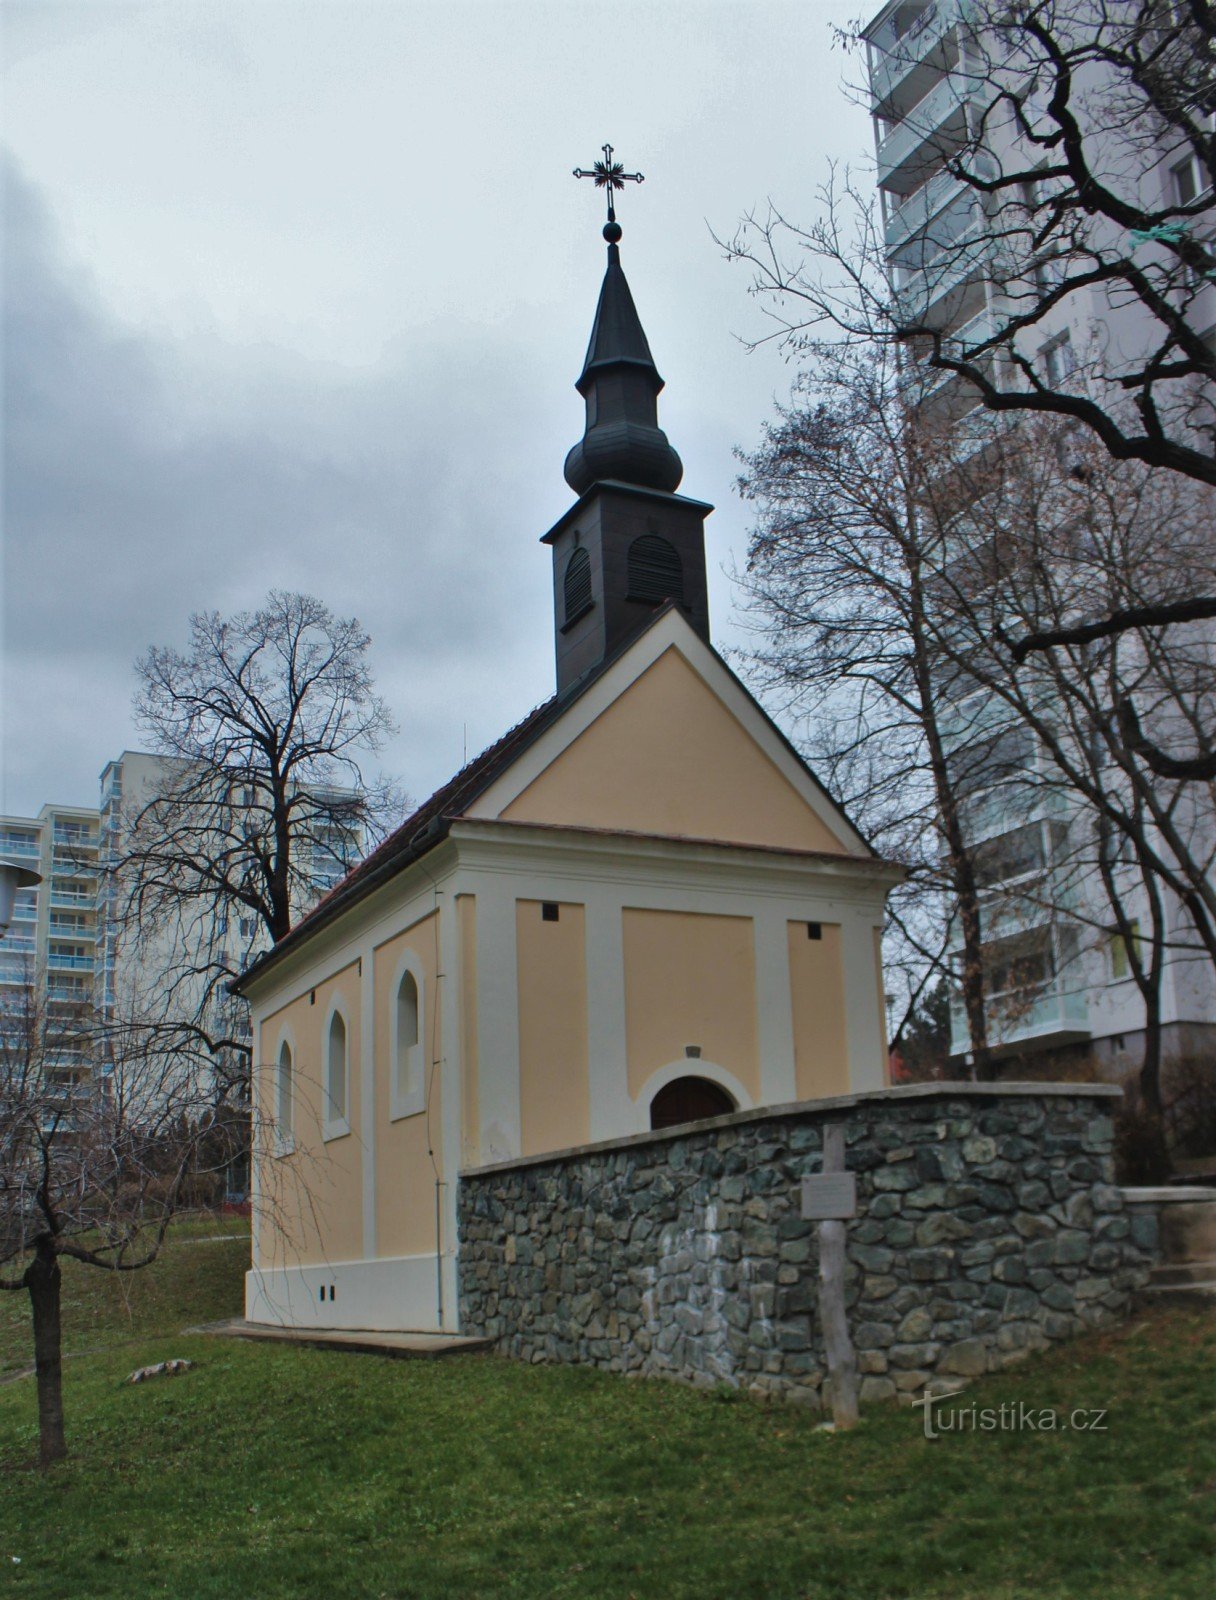 Brno-Bohunice - Pyhän Nikolauksen kappeli Cyril ja Methodius